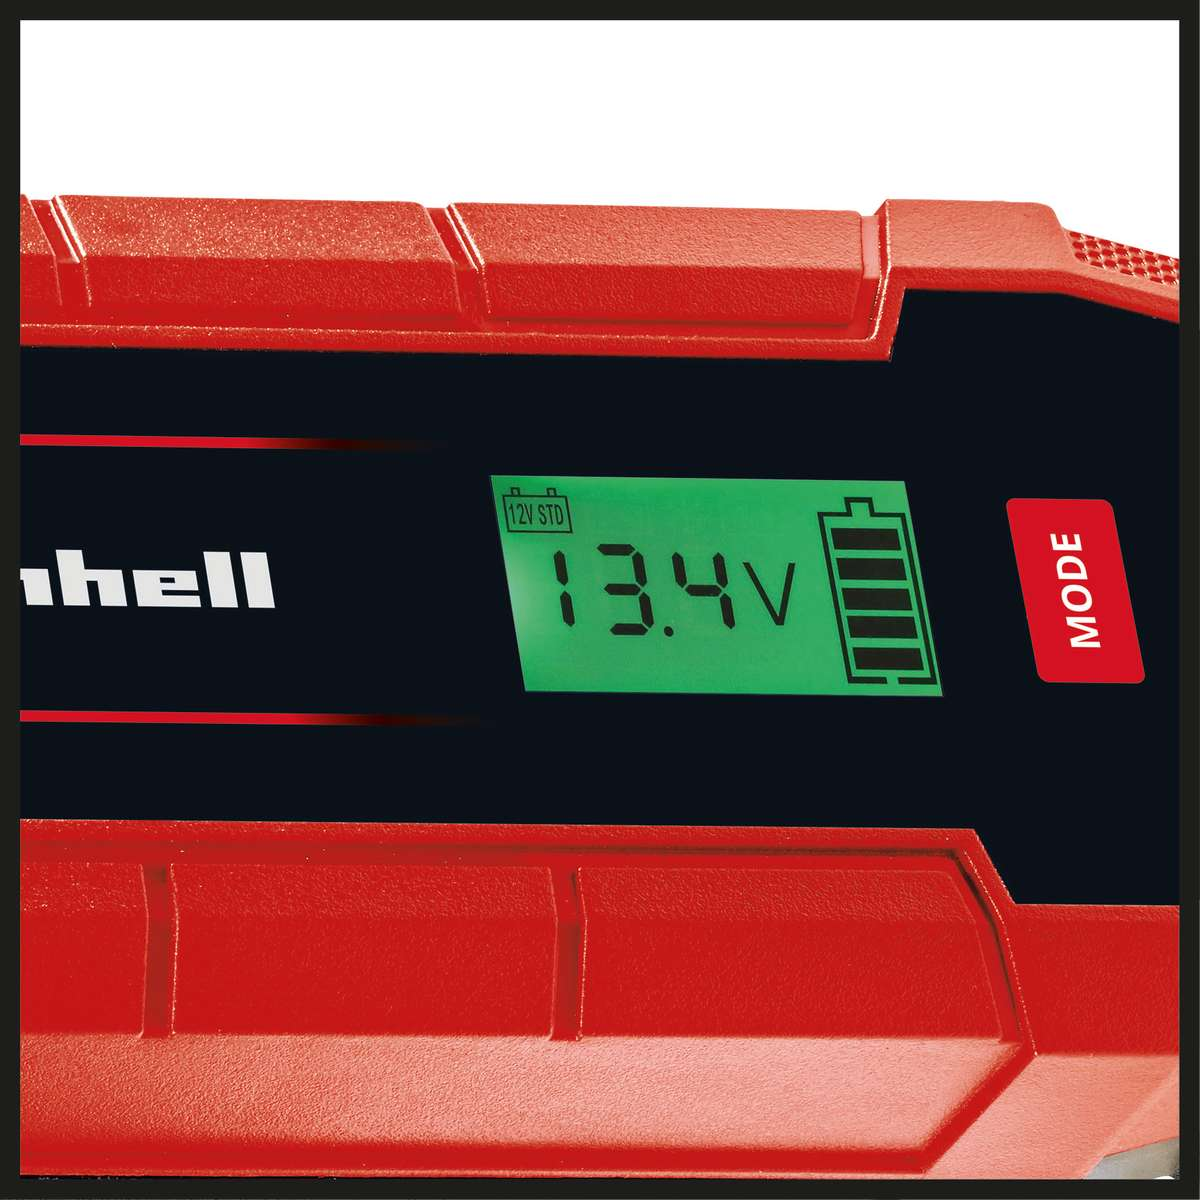 M CE-BC 6 EINHELL Autobatterie Ladegerät, Rot